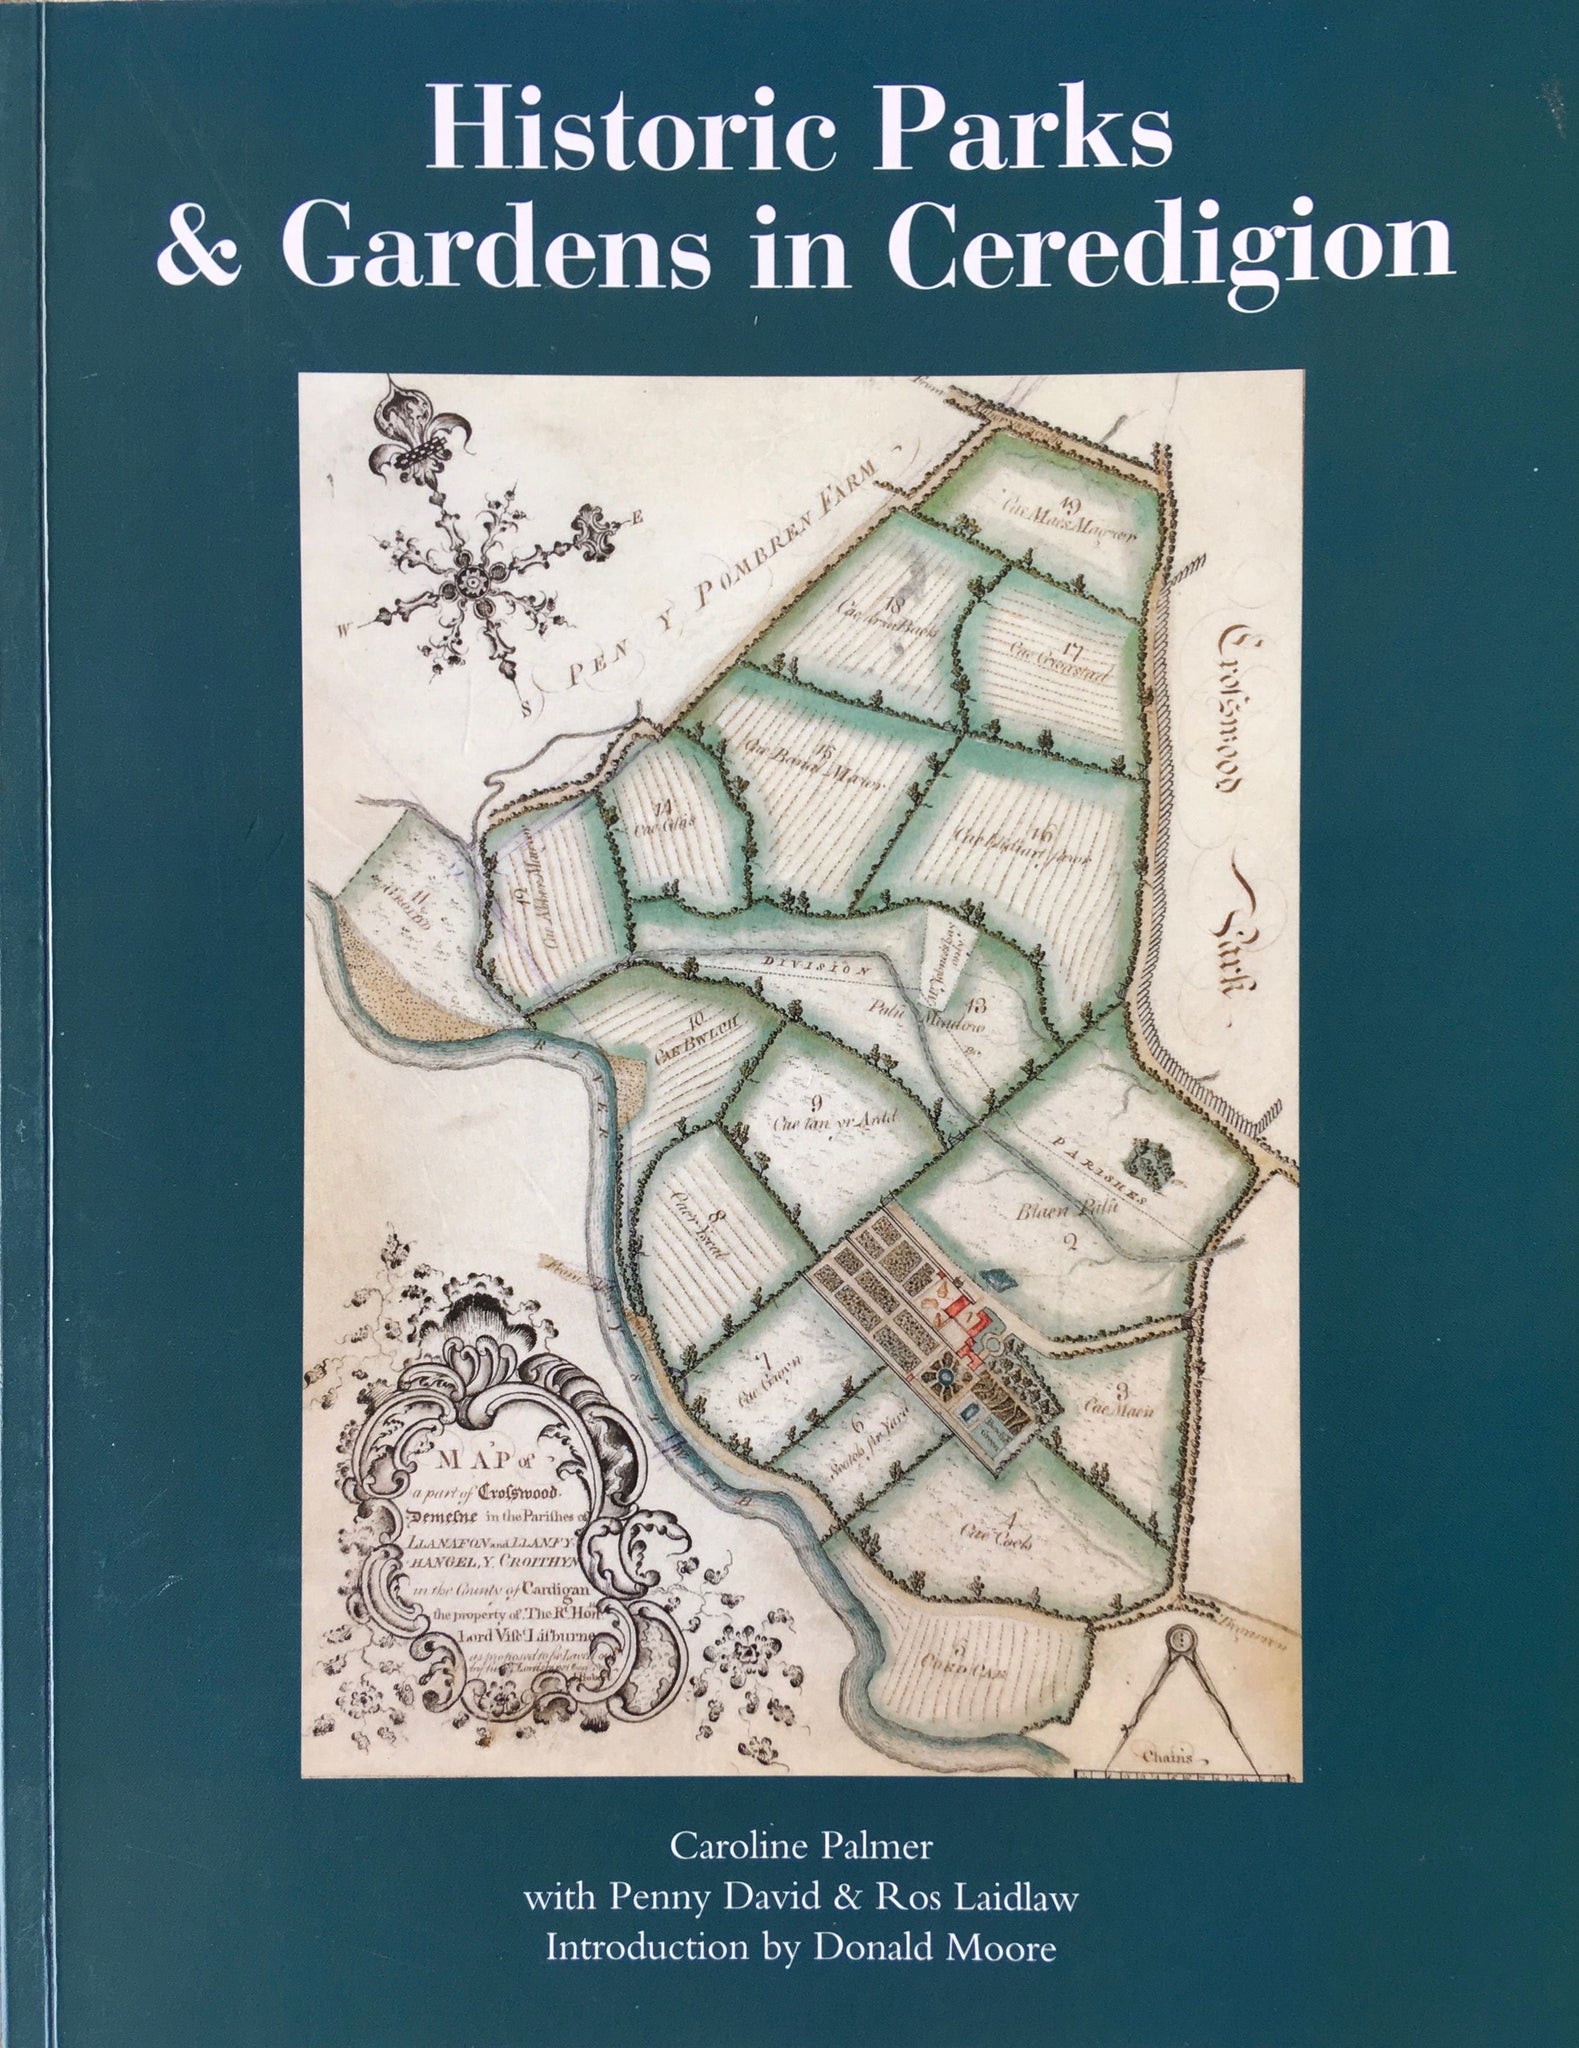 'Historic Parks & Gardens in Ceredigion' by Caroline Palmer